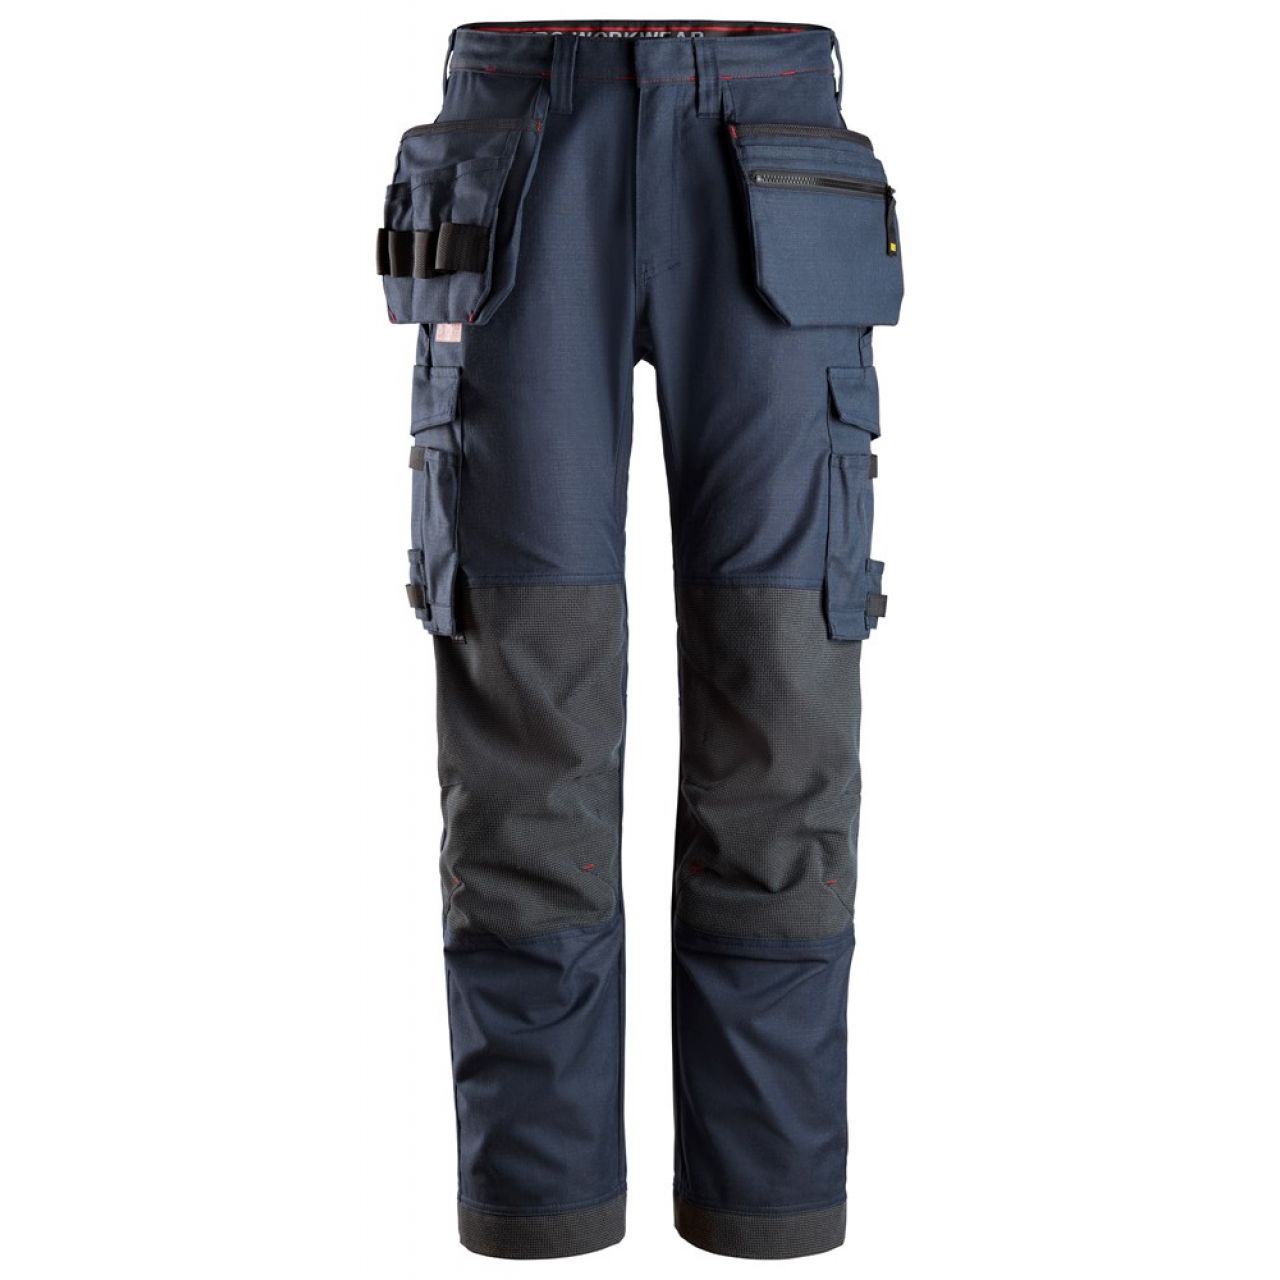 6262 Pantalones largos de trabajo con bolsillos flotantes simétricos ProtecWork azul marino talla 108